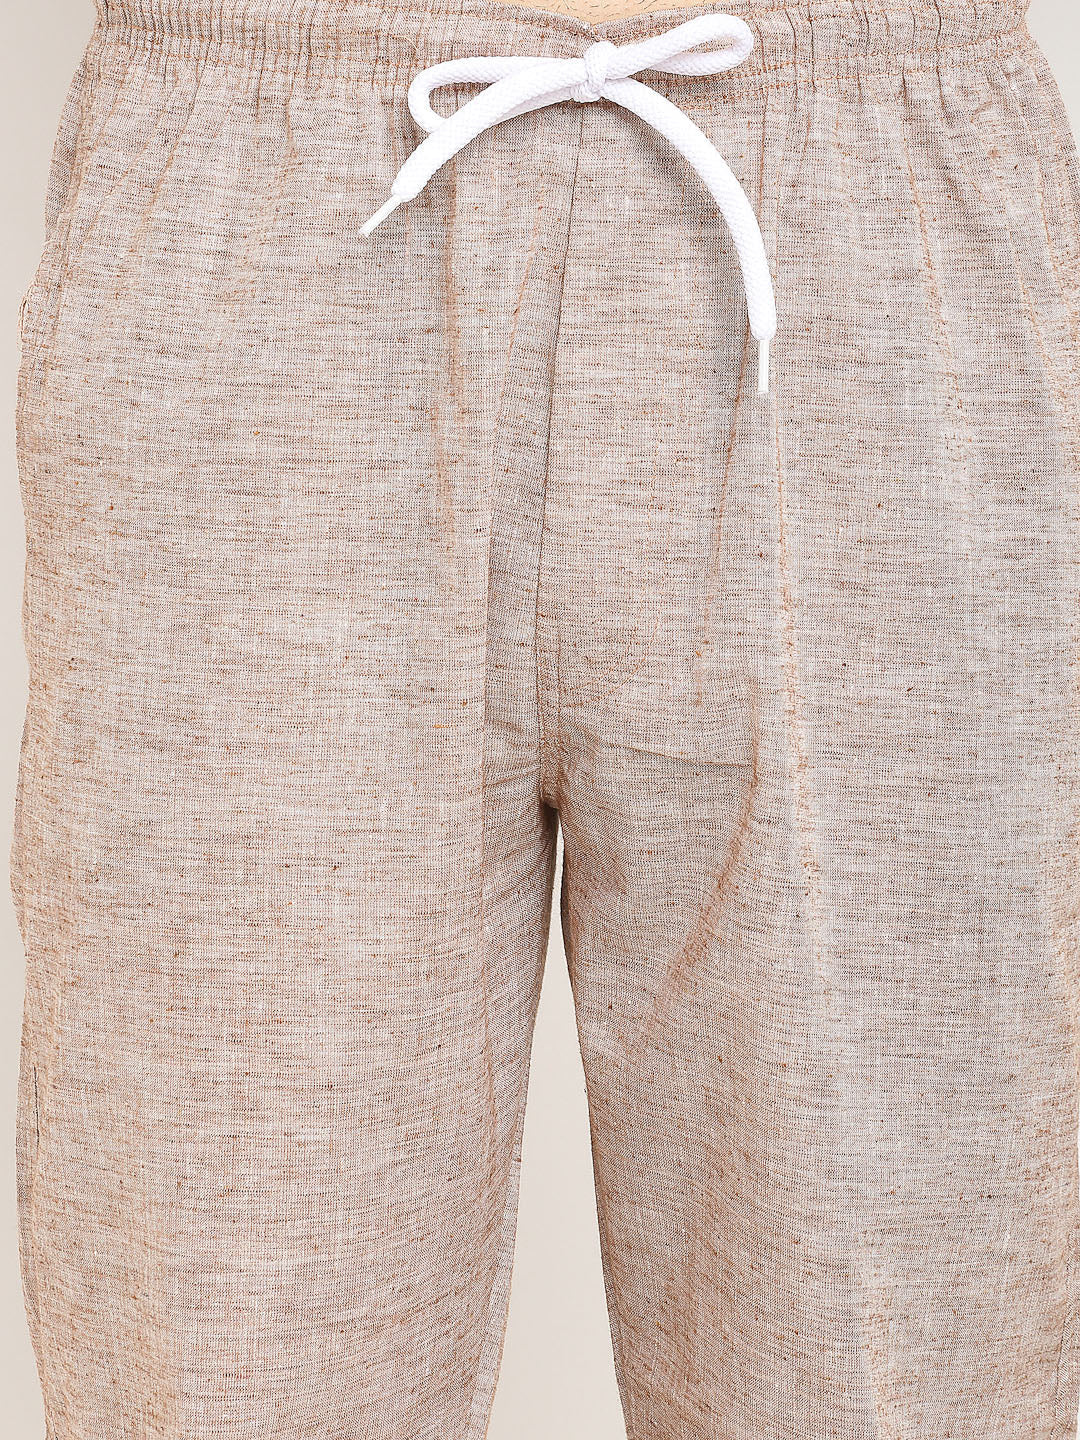 Men's Brown Linen Cotton Track Pants ( JOG 021Brown ) - Jainish